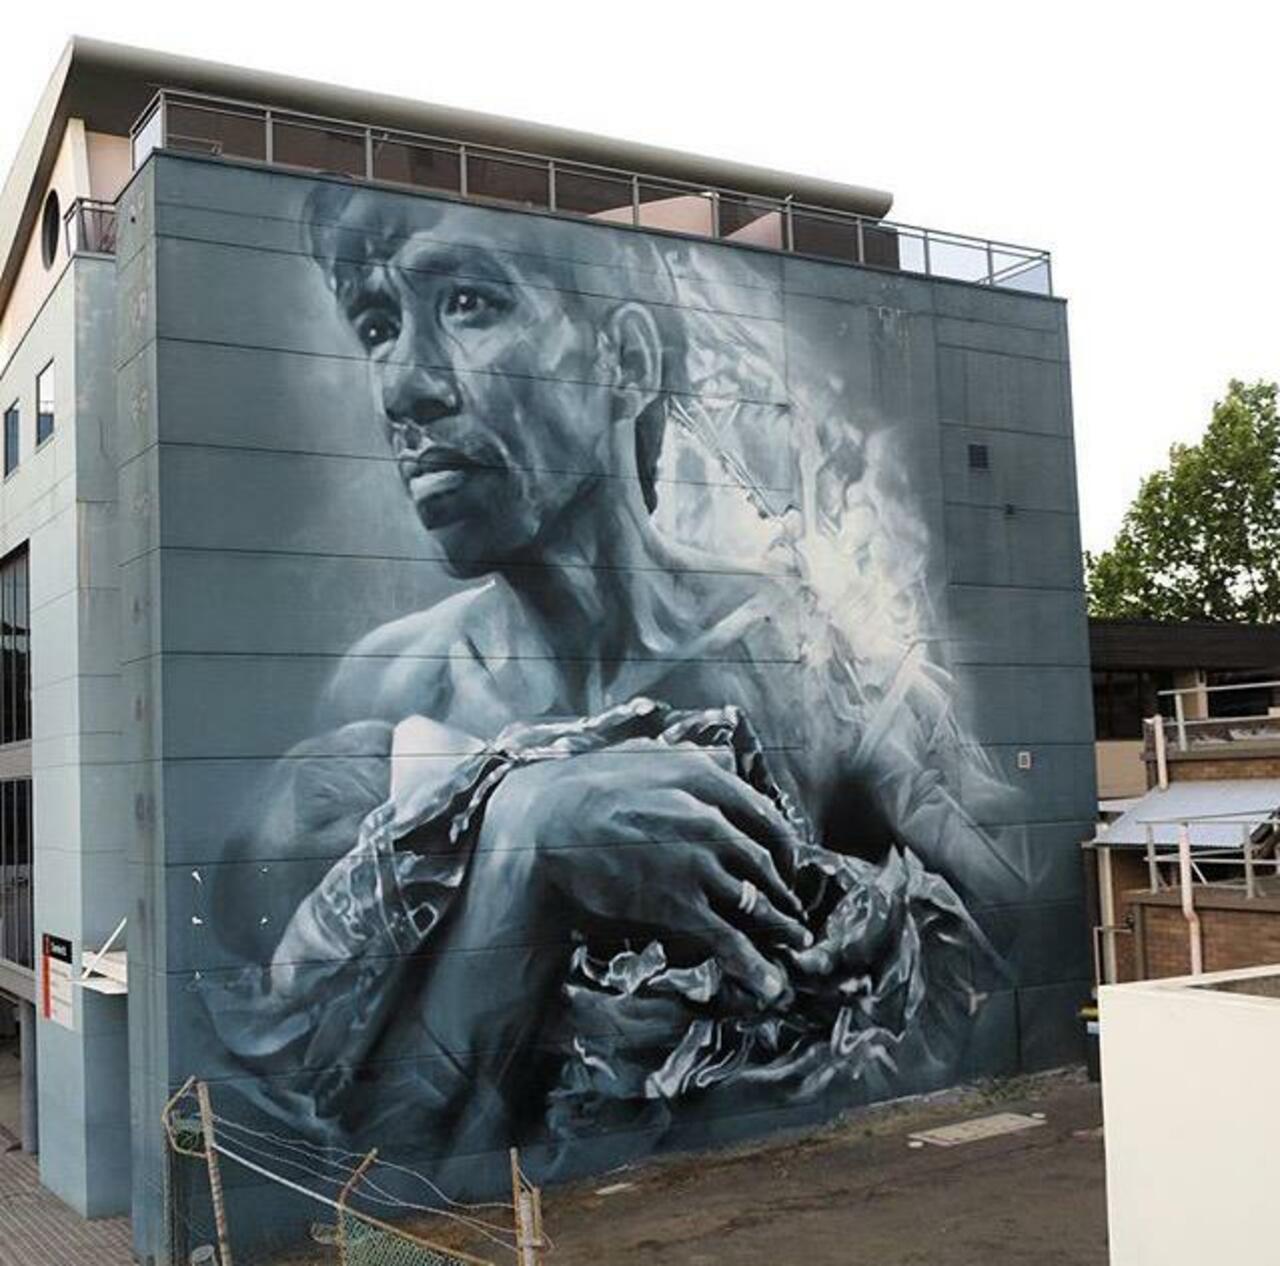 RT @artlife365: New Street Art by Guido Van Helten in Wollongong Australia 

#art #graffiti #mural #streetart http://t.co/jzWKdwqbh7